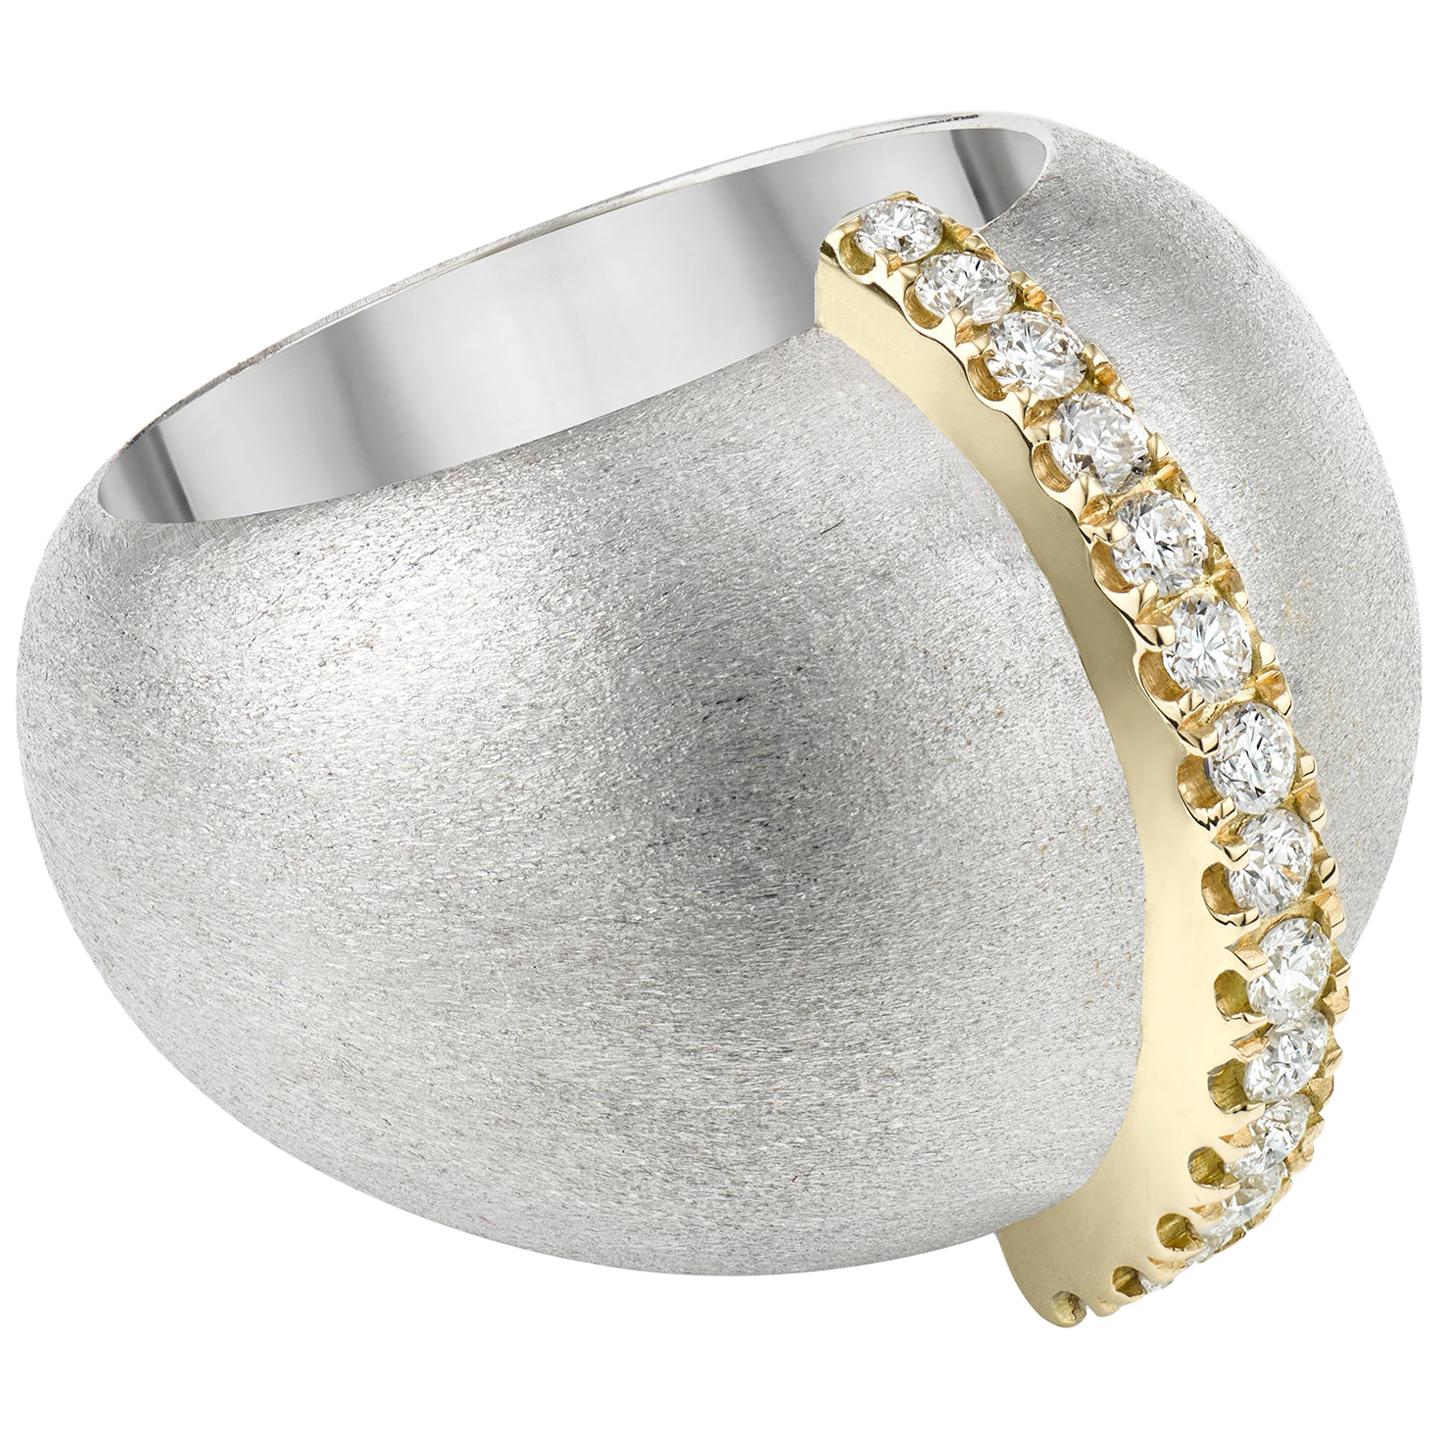 AnaKatarina White and Yellow Gold and Diamond Talisman Ring